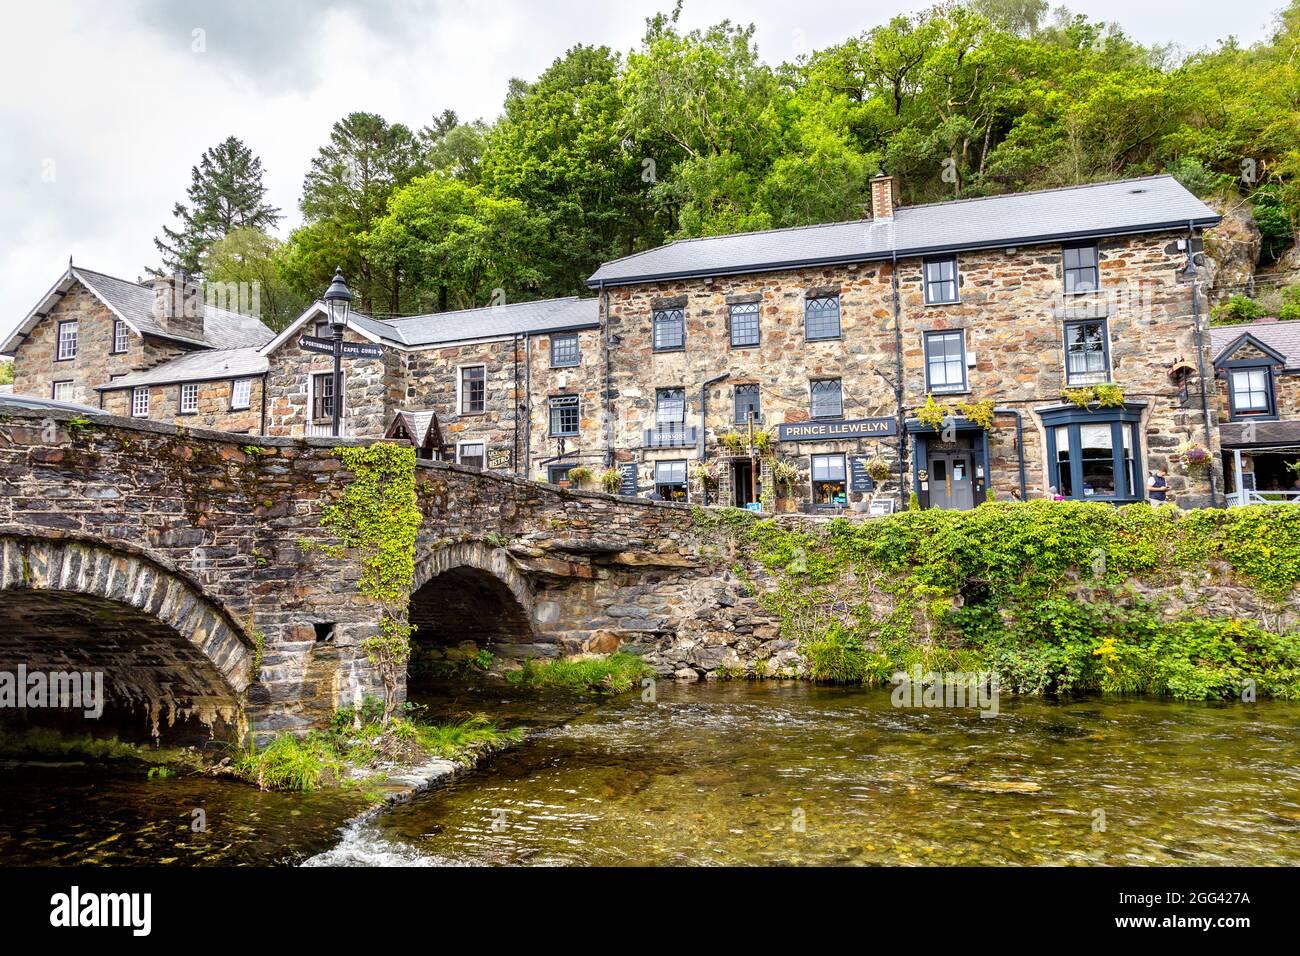 Bridge over the River Colwyn and Prince Llewelyn pub at Beddgelert village in Gwynedd, Snowdonia National Park, Wales, UK Stock Photo